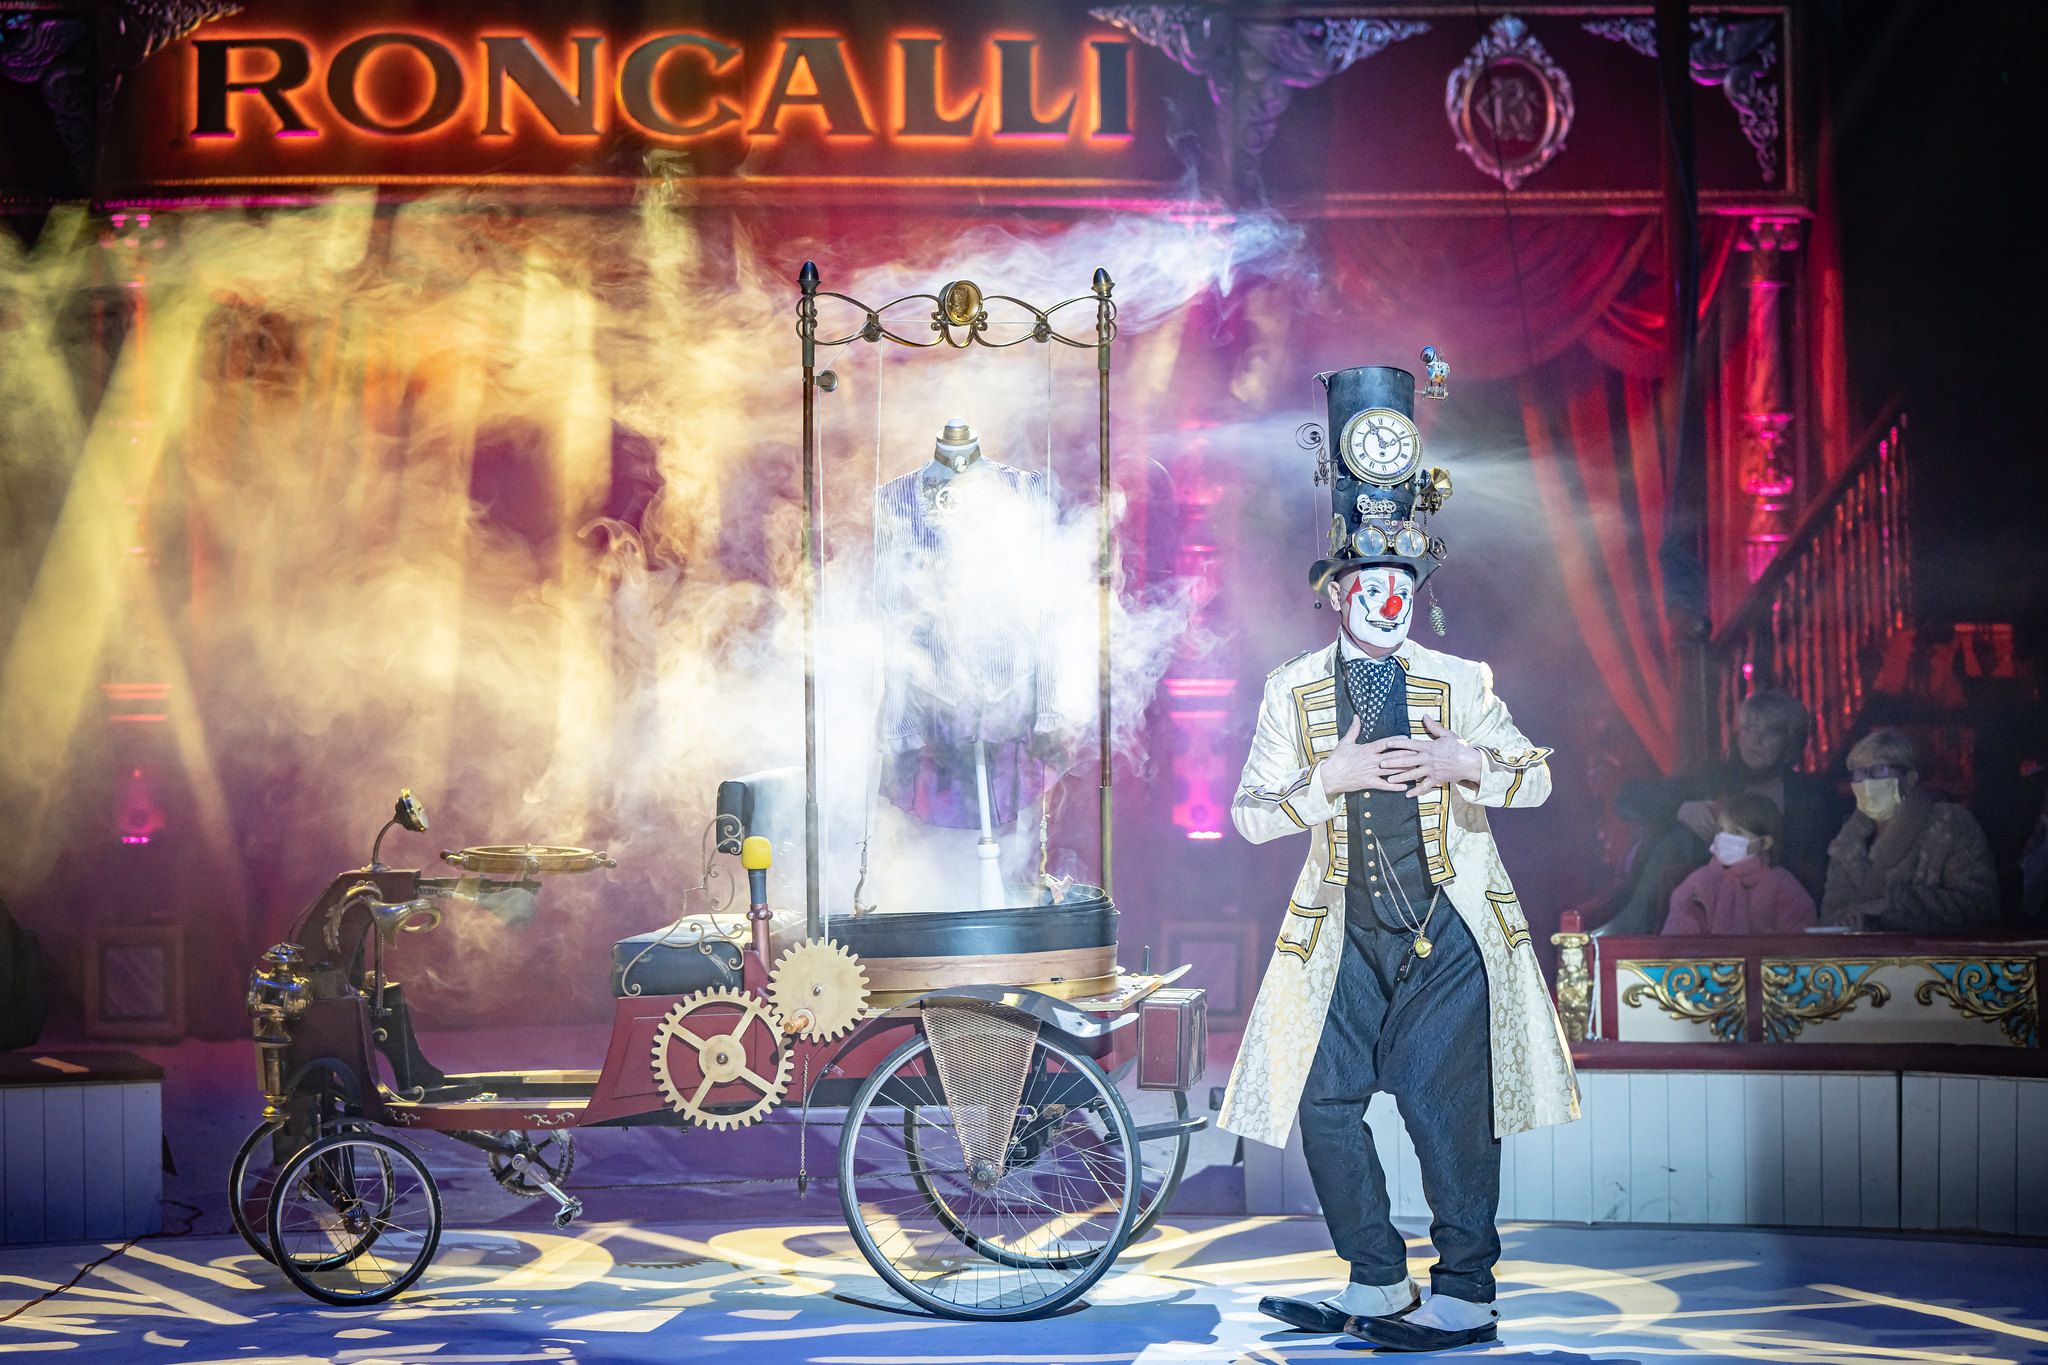 Bodennebel im Circus Roncalli (Foto: Rob van Houdt)